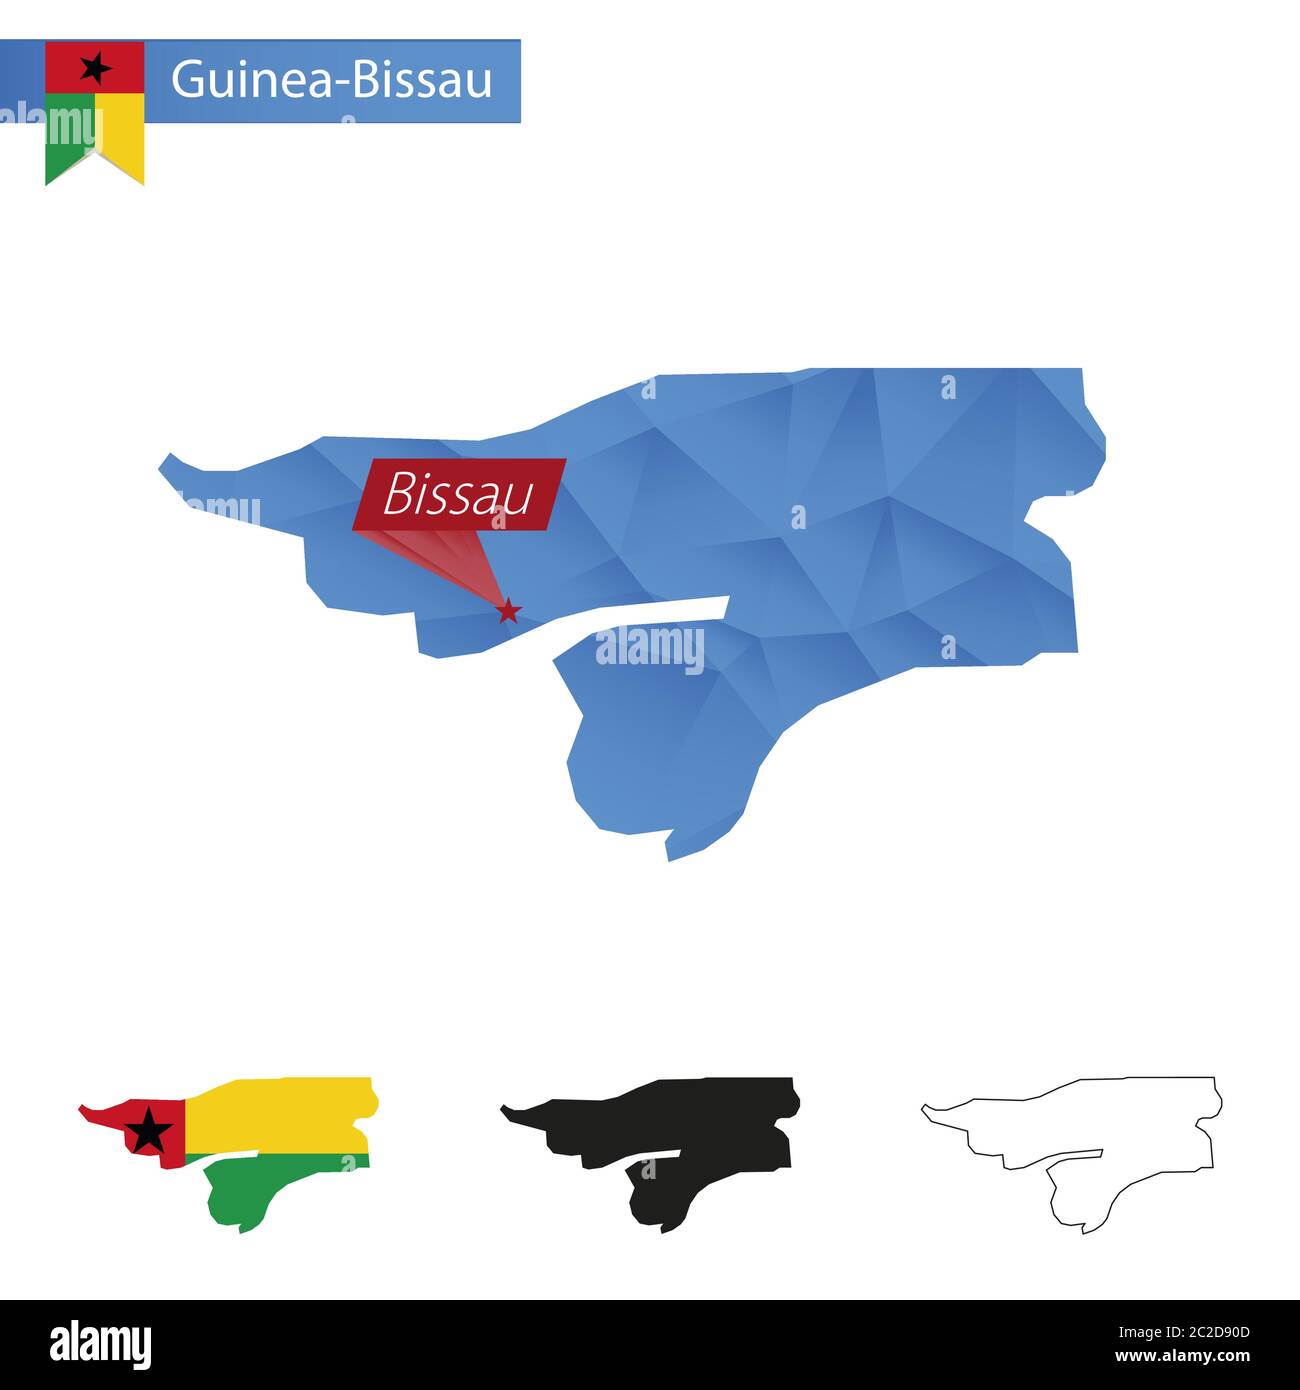 Guinea-Bissau, History, Map, Flag, Population, Capital, Language, & Facts